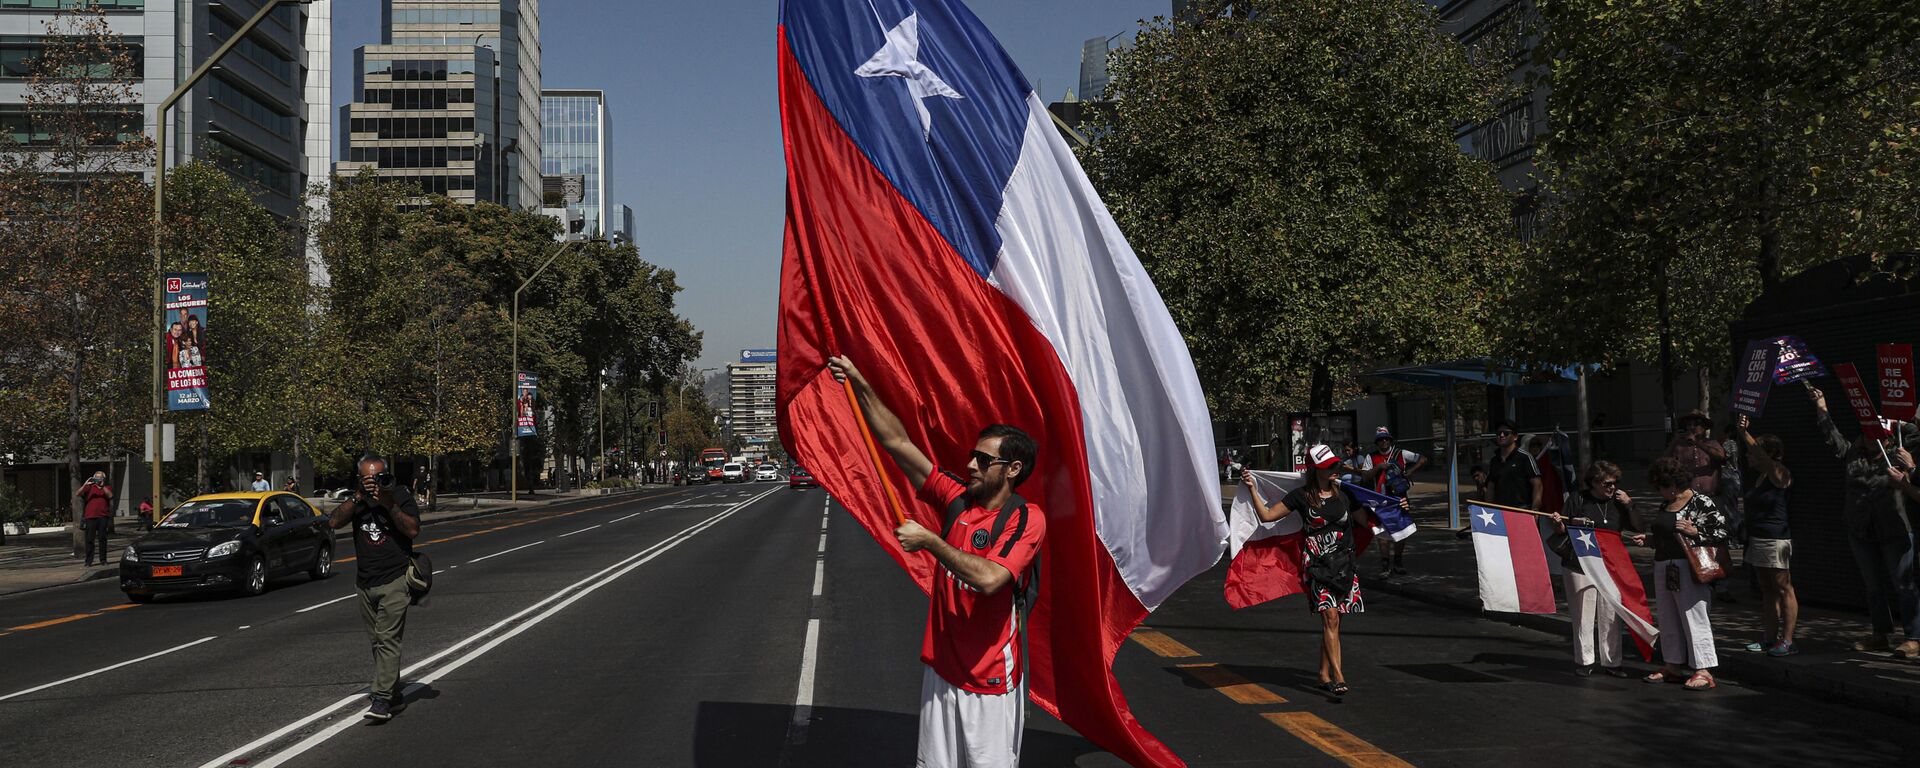 Un manifestante con la bandera de Chile - Sputnik Mundo, 1920, 13.10.2021